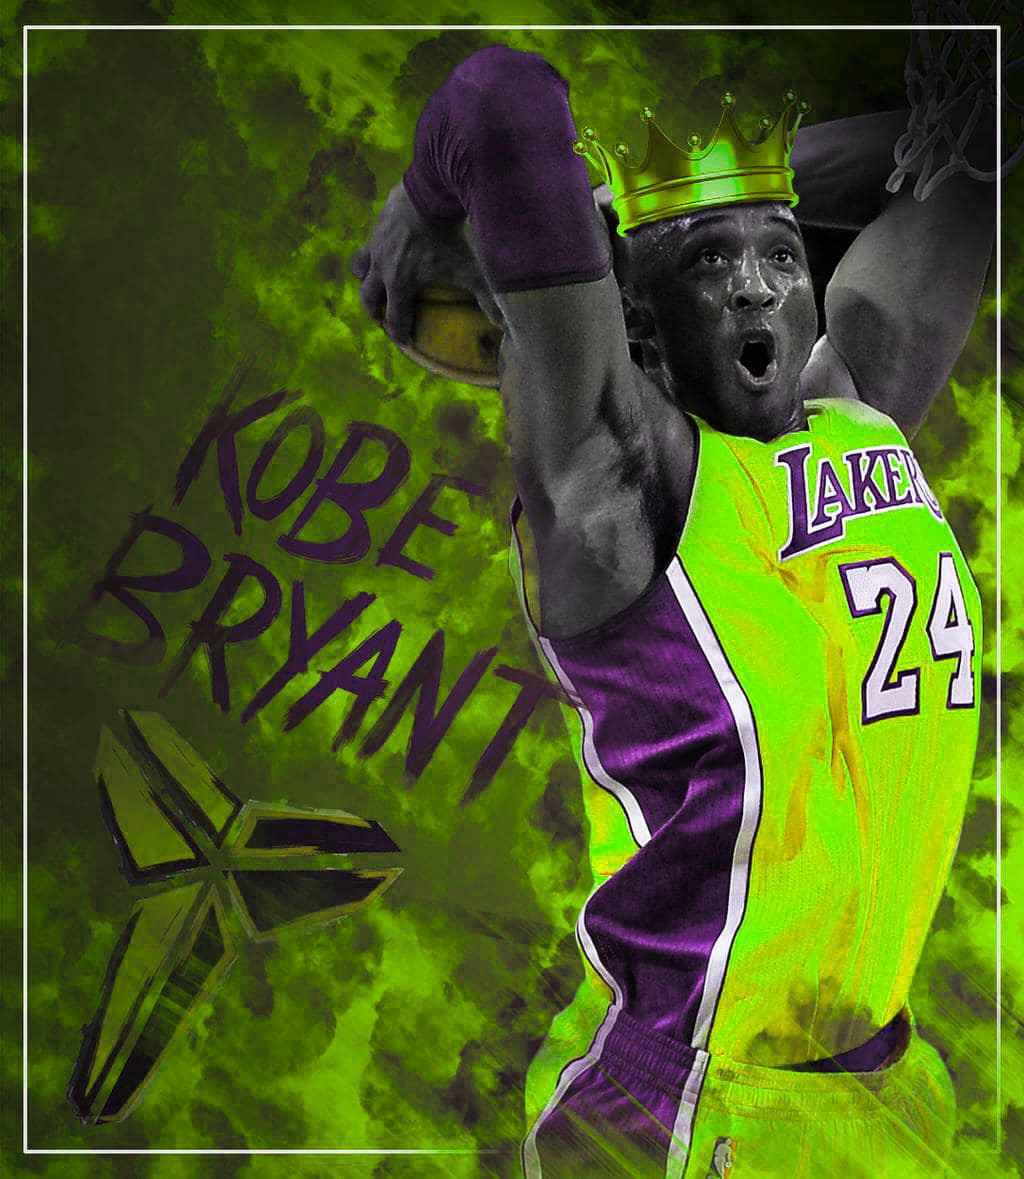 NBA Wallpapers on Twitter Beautiful wallpaper of Kobe Bryant full size  2880x1800 pixels at  httpstcoAqXPHWKtTk  NBA KobeBryant  httpstcouWAxRTHw6g  X